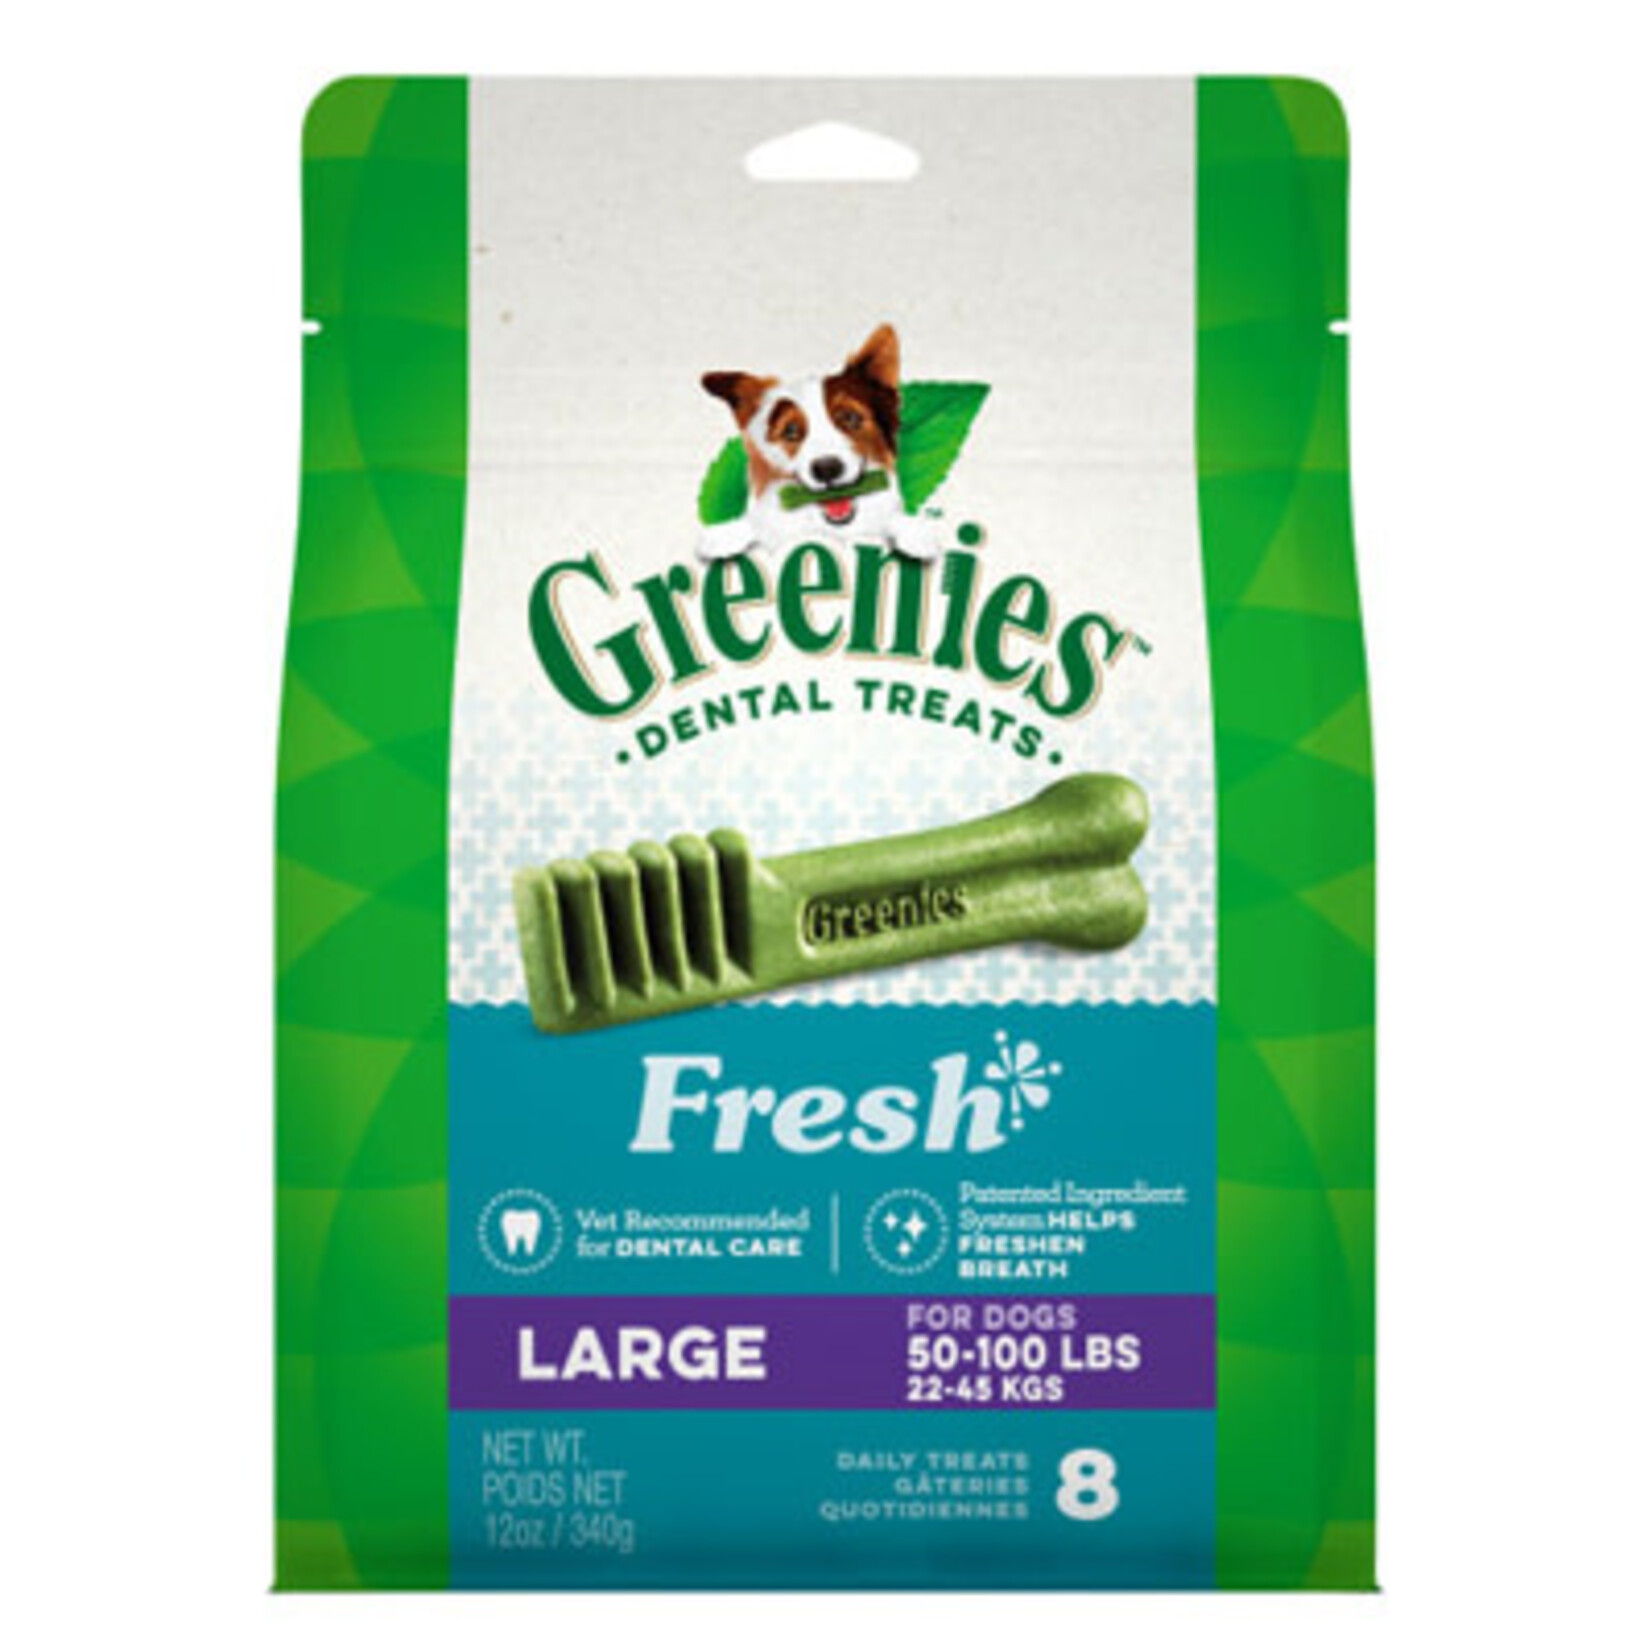 Greenies Greenies 12oz Dog Dental Chews